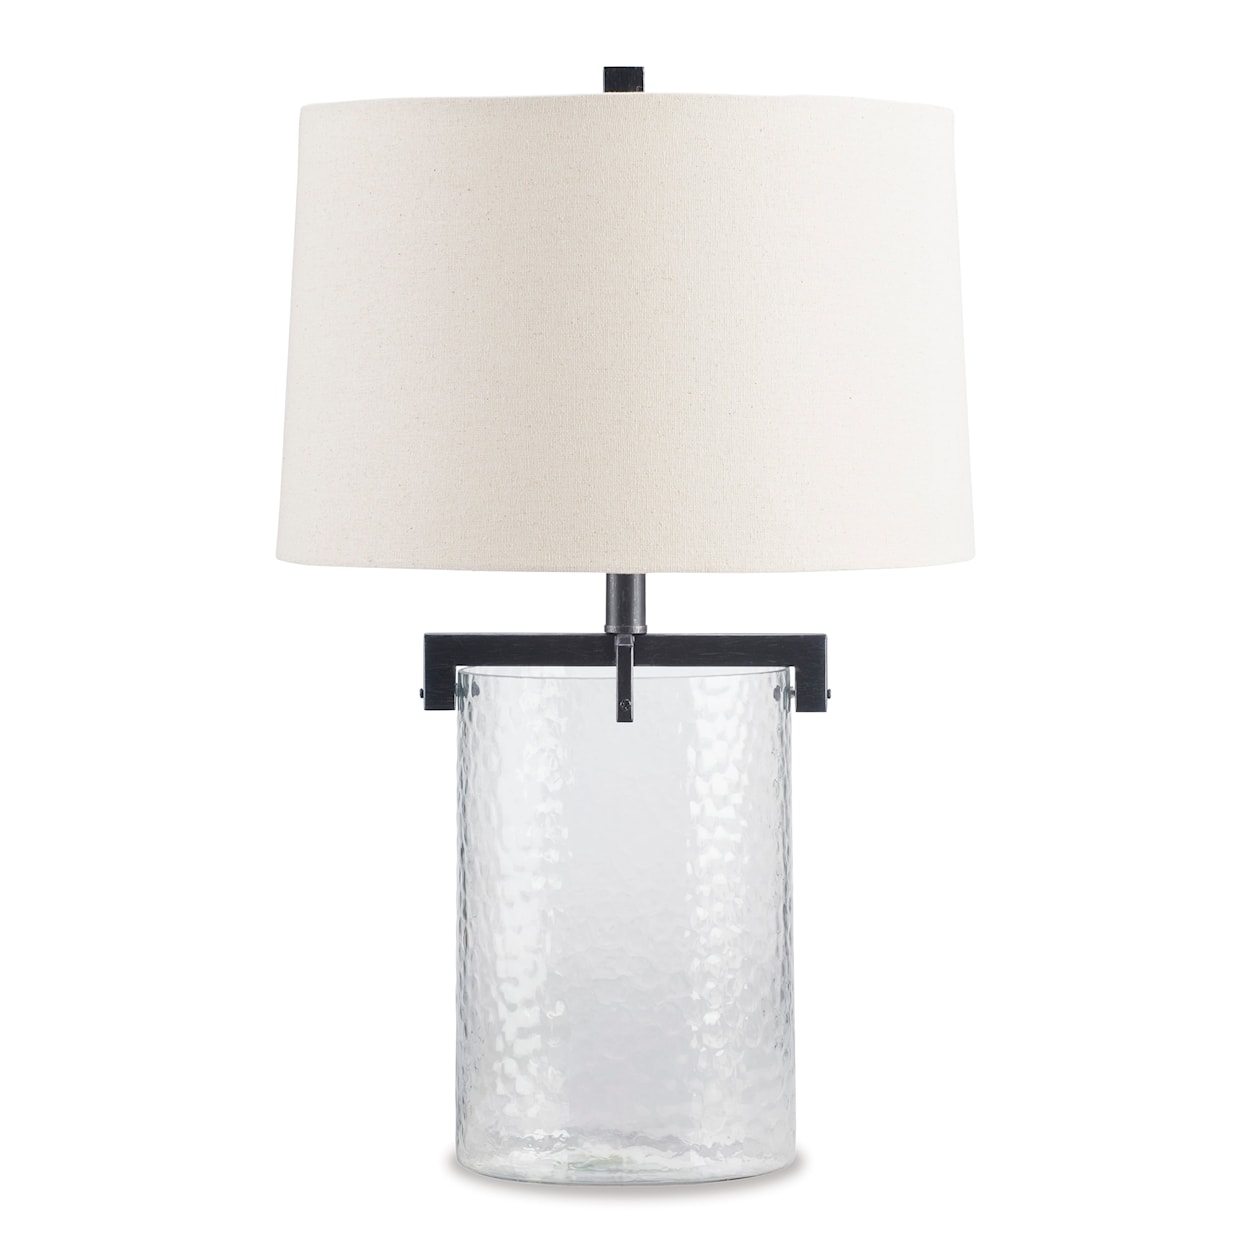 Ashley Furniture Signature Design Lamps - Casual Fentonley Table Lamp